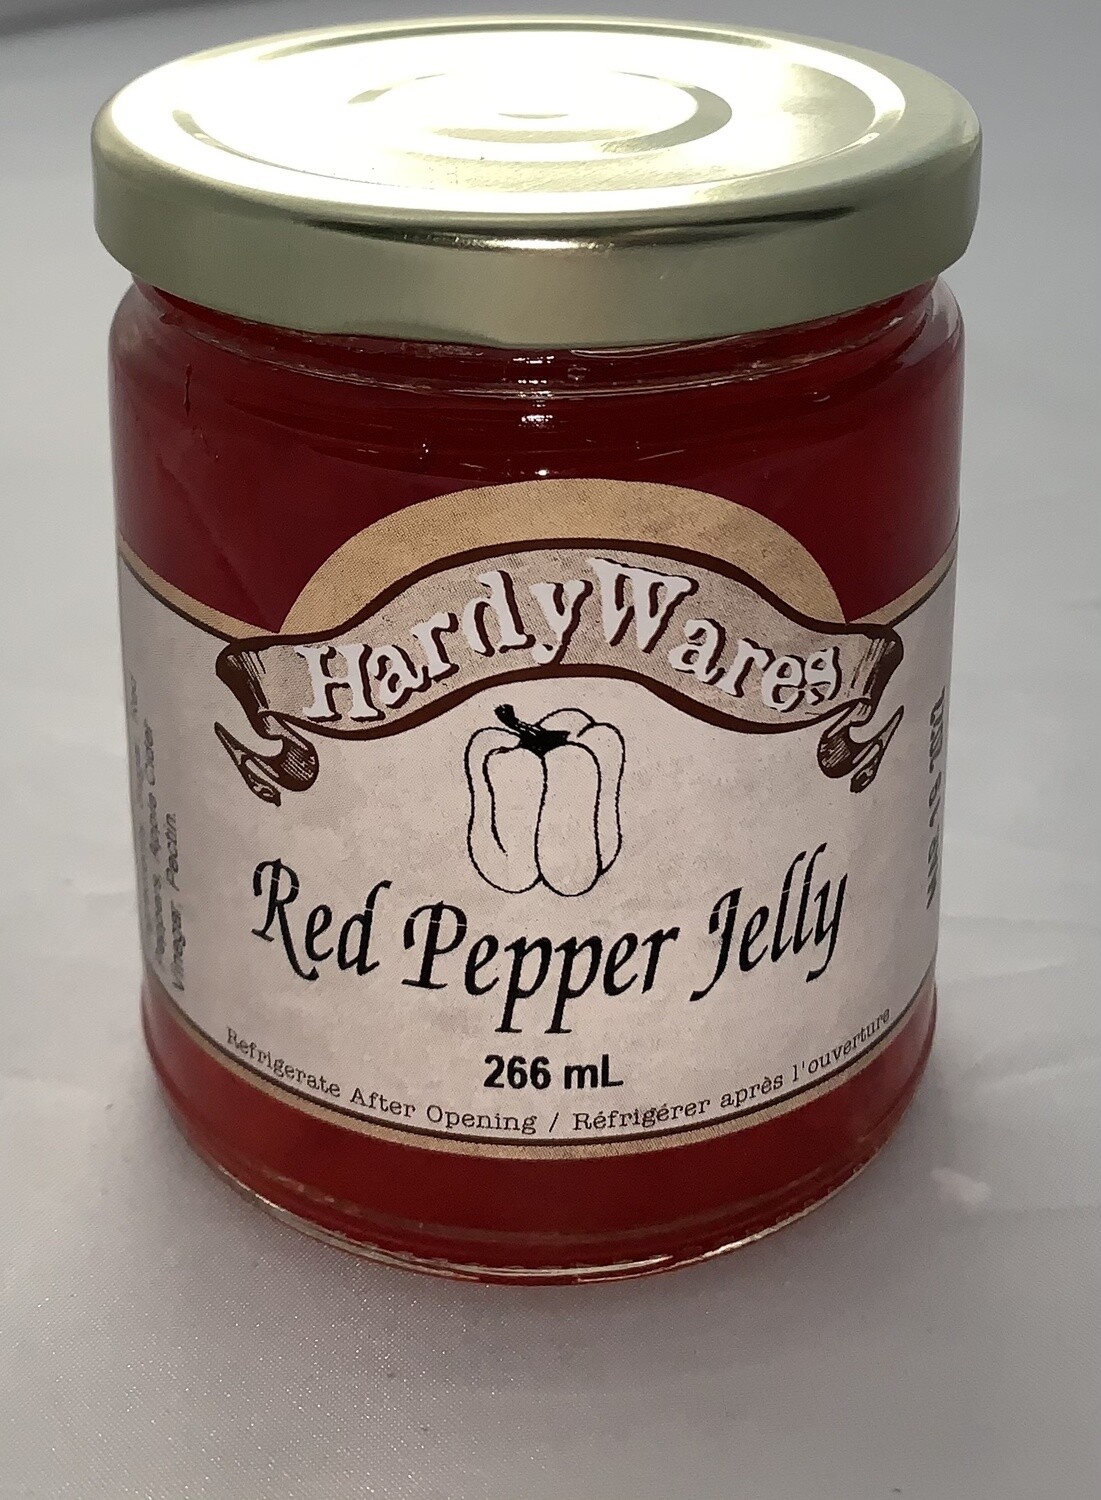 Hardywares Preserves Red Pepper Jelly